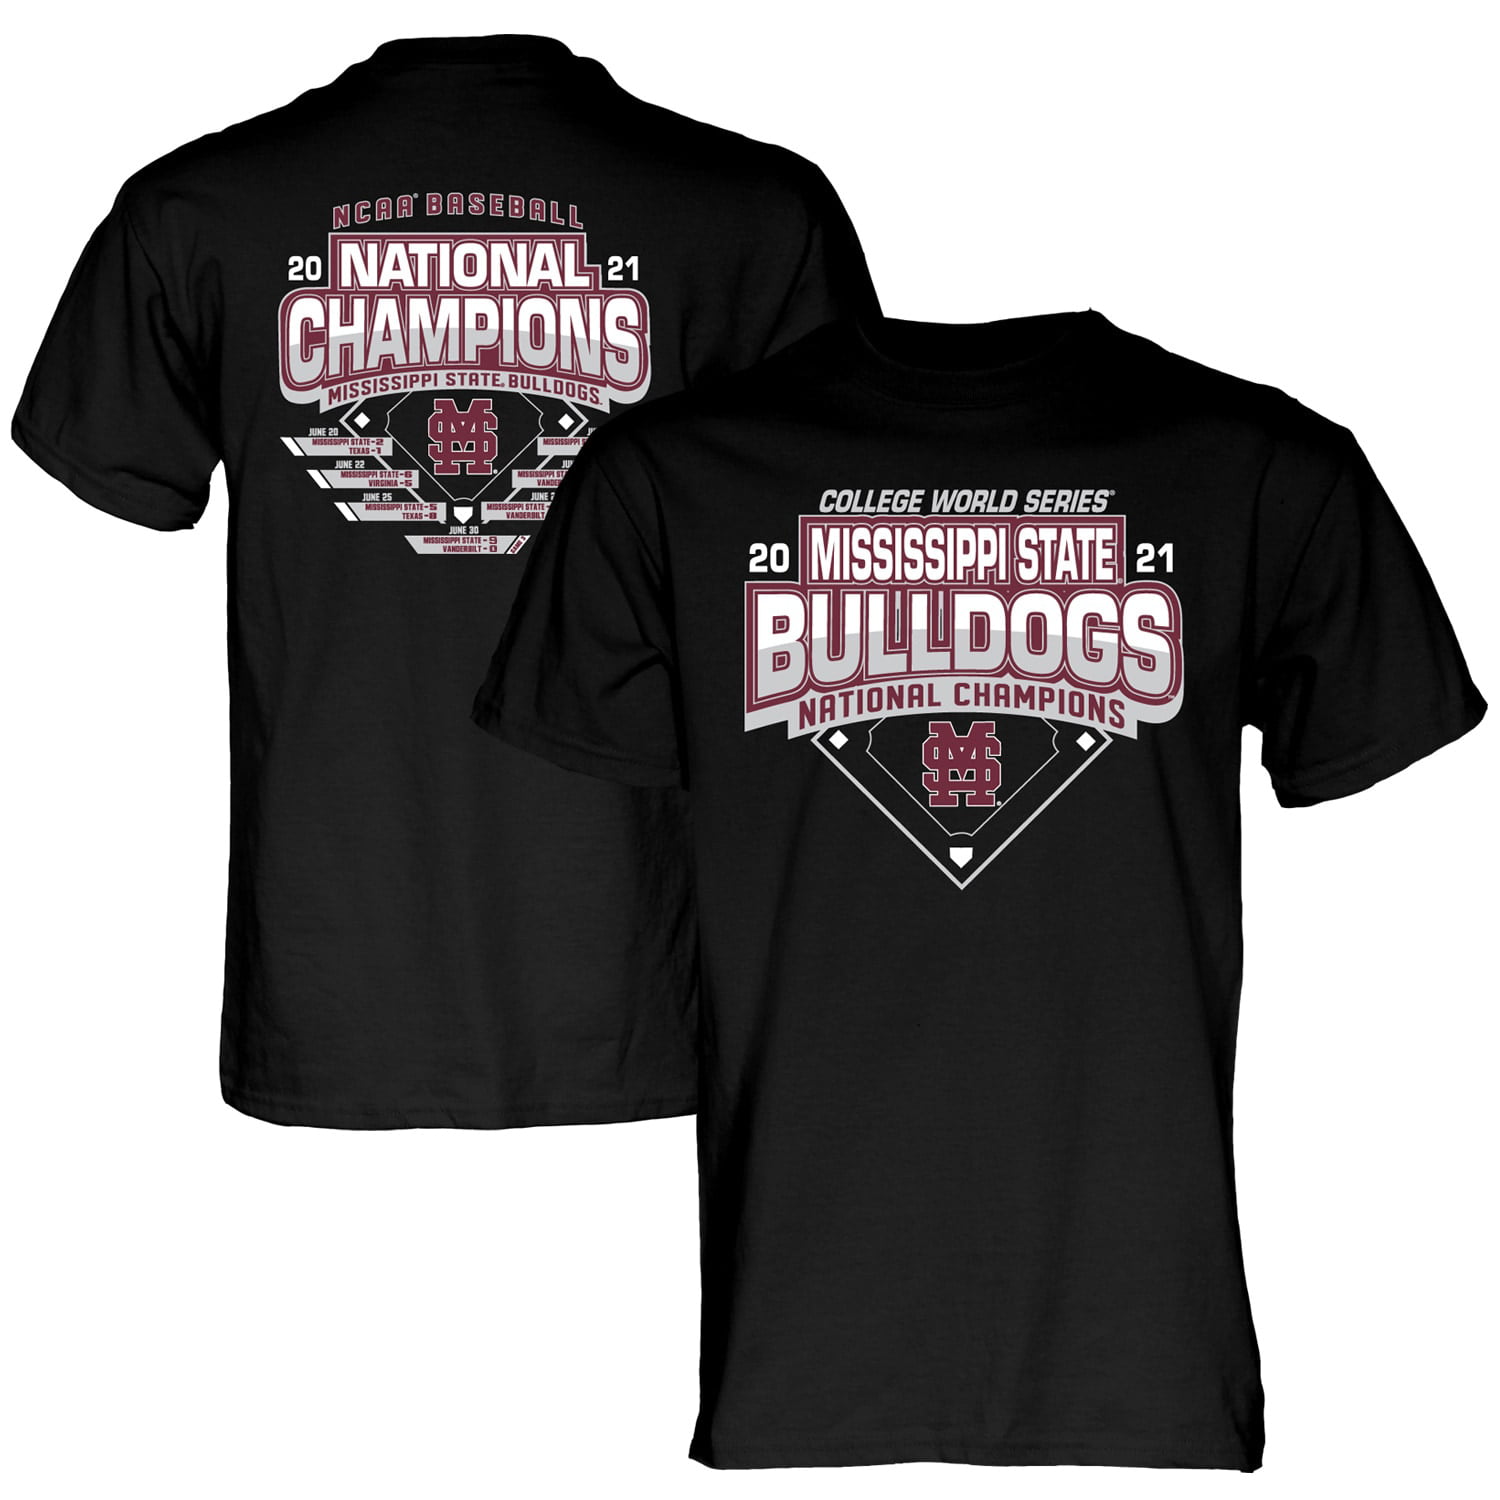 Bulldogs NCAA baseball tournament jersey